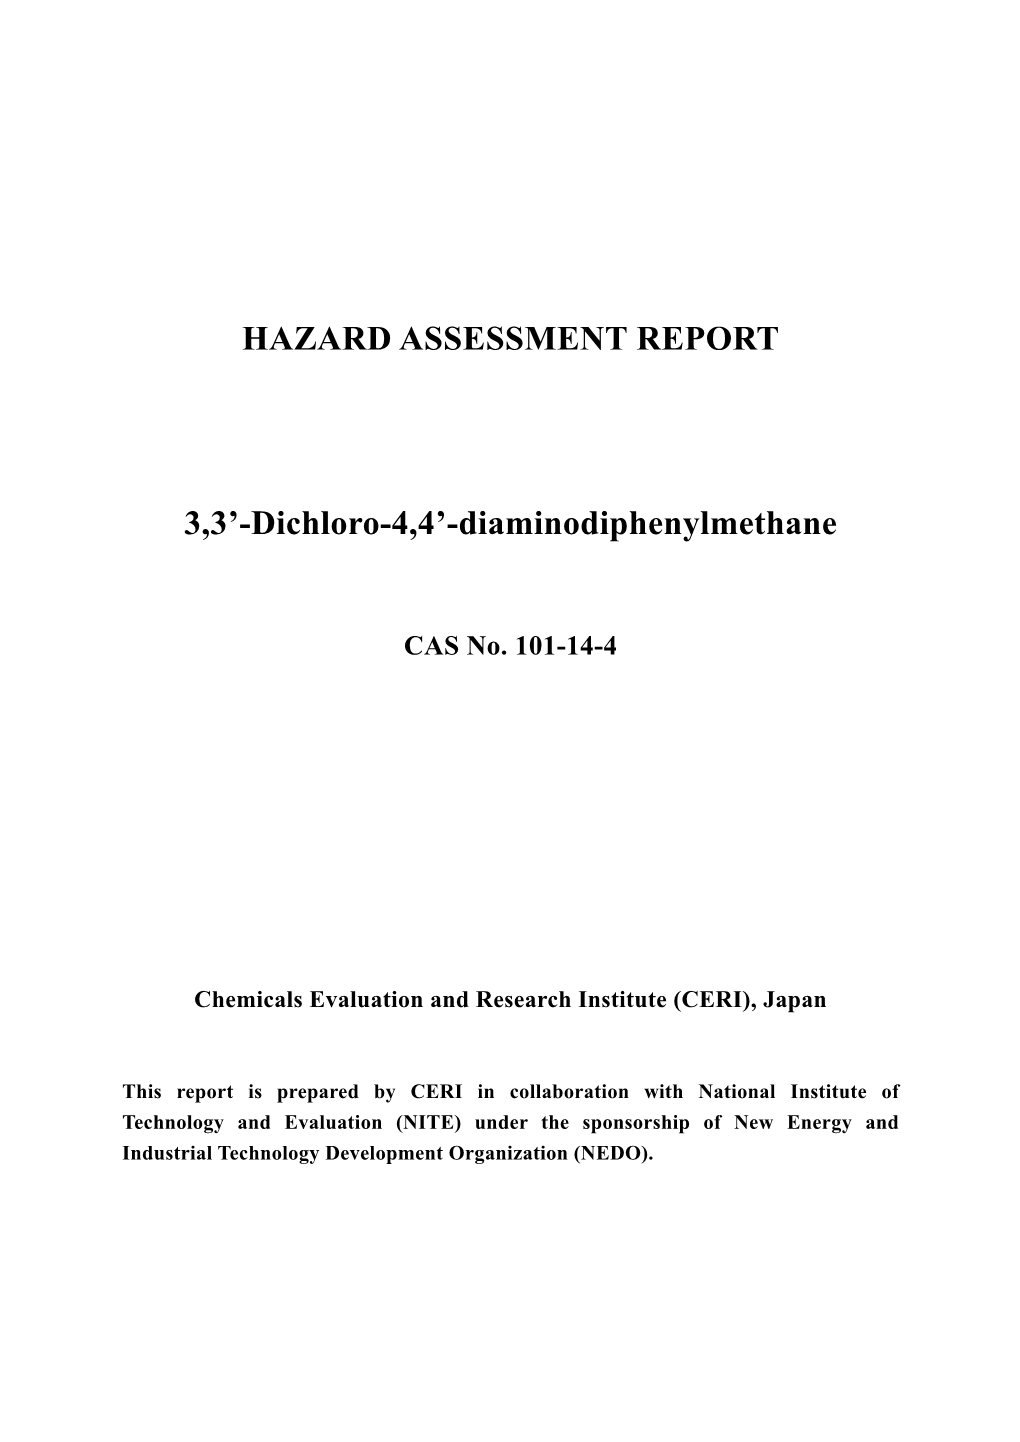 HAZARD ASSESSMENT REPORT 3,3'-Dichloro-4,4